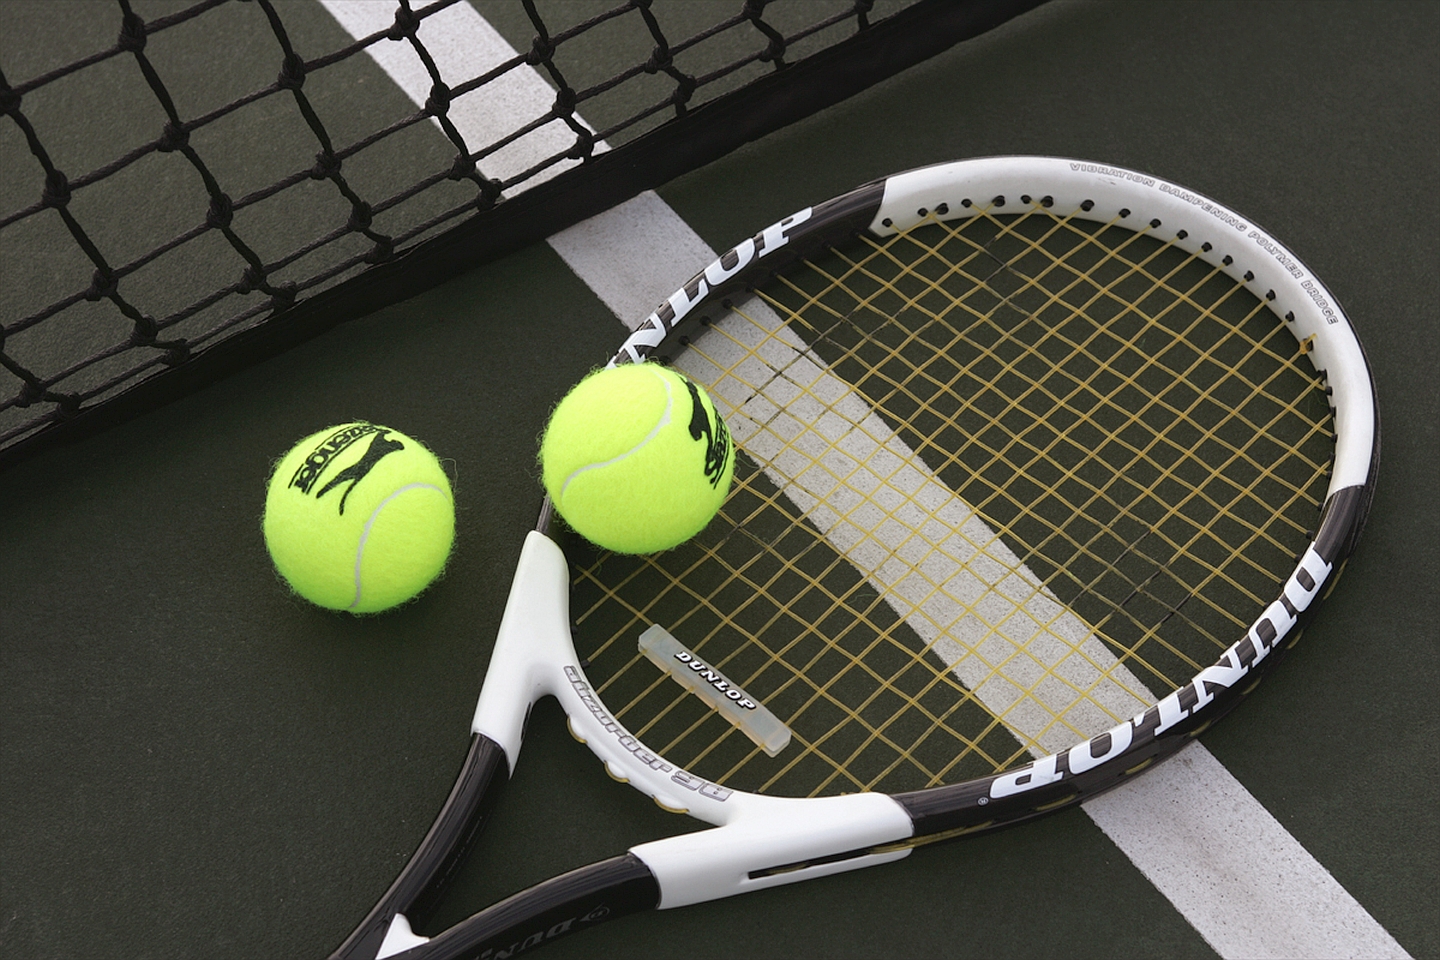 tenis wallpaper,tennis,racket,tennis racket,tennis equipment,strings